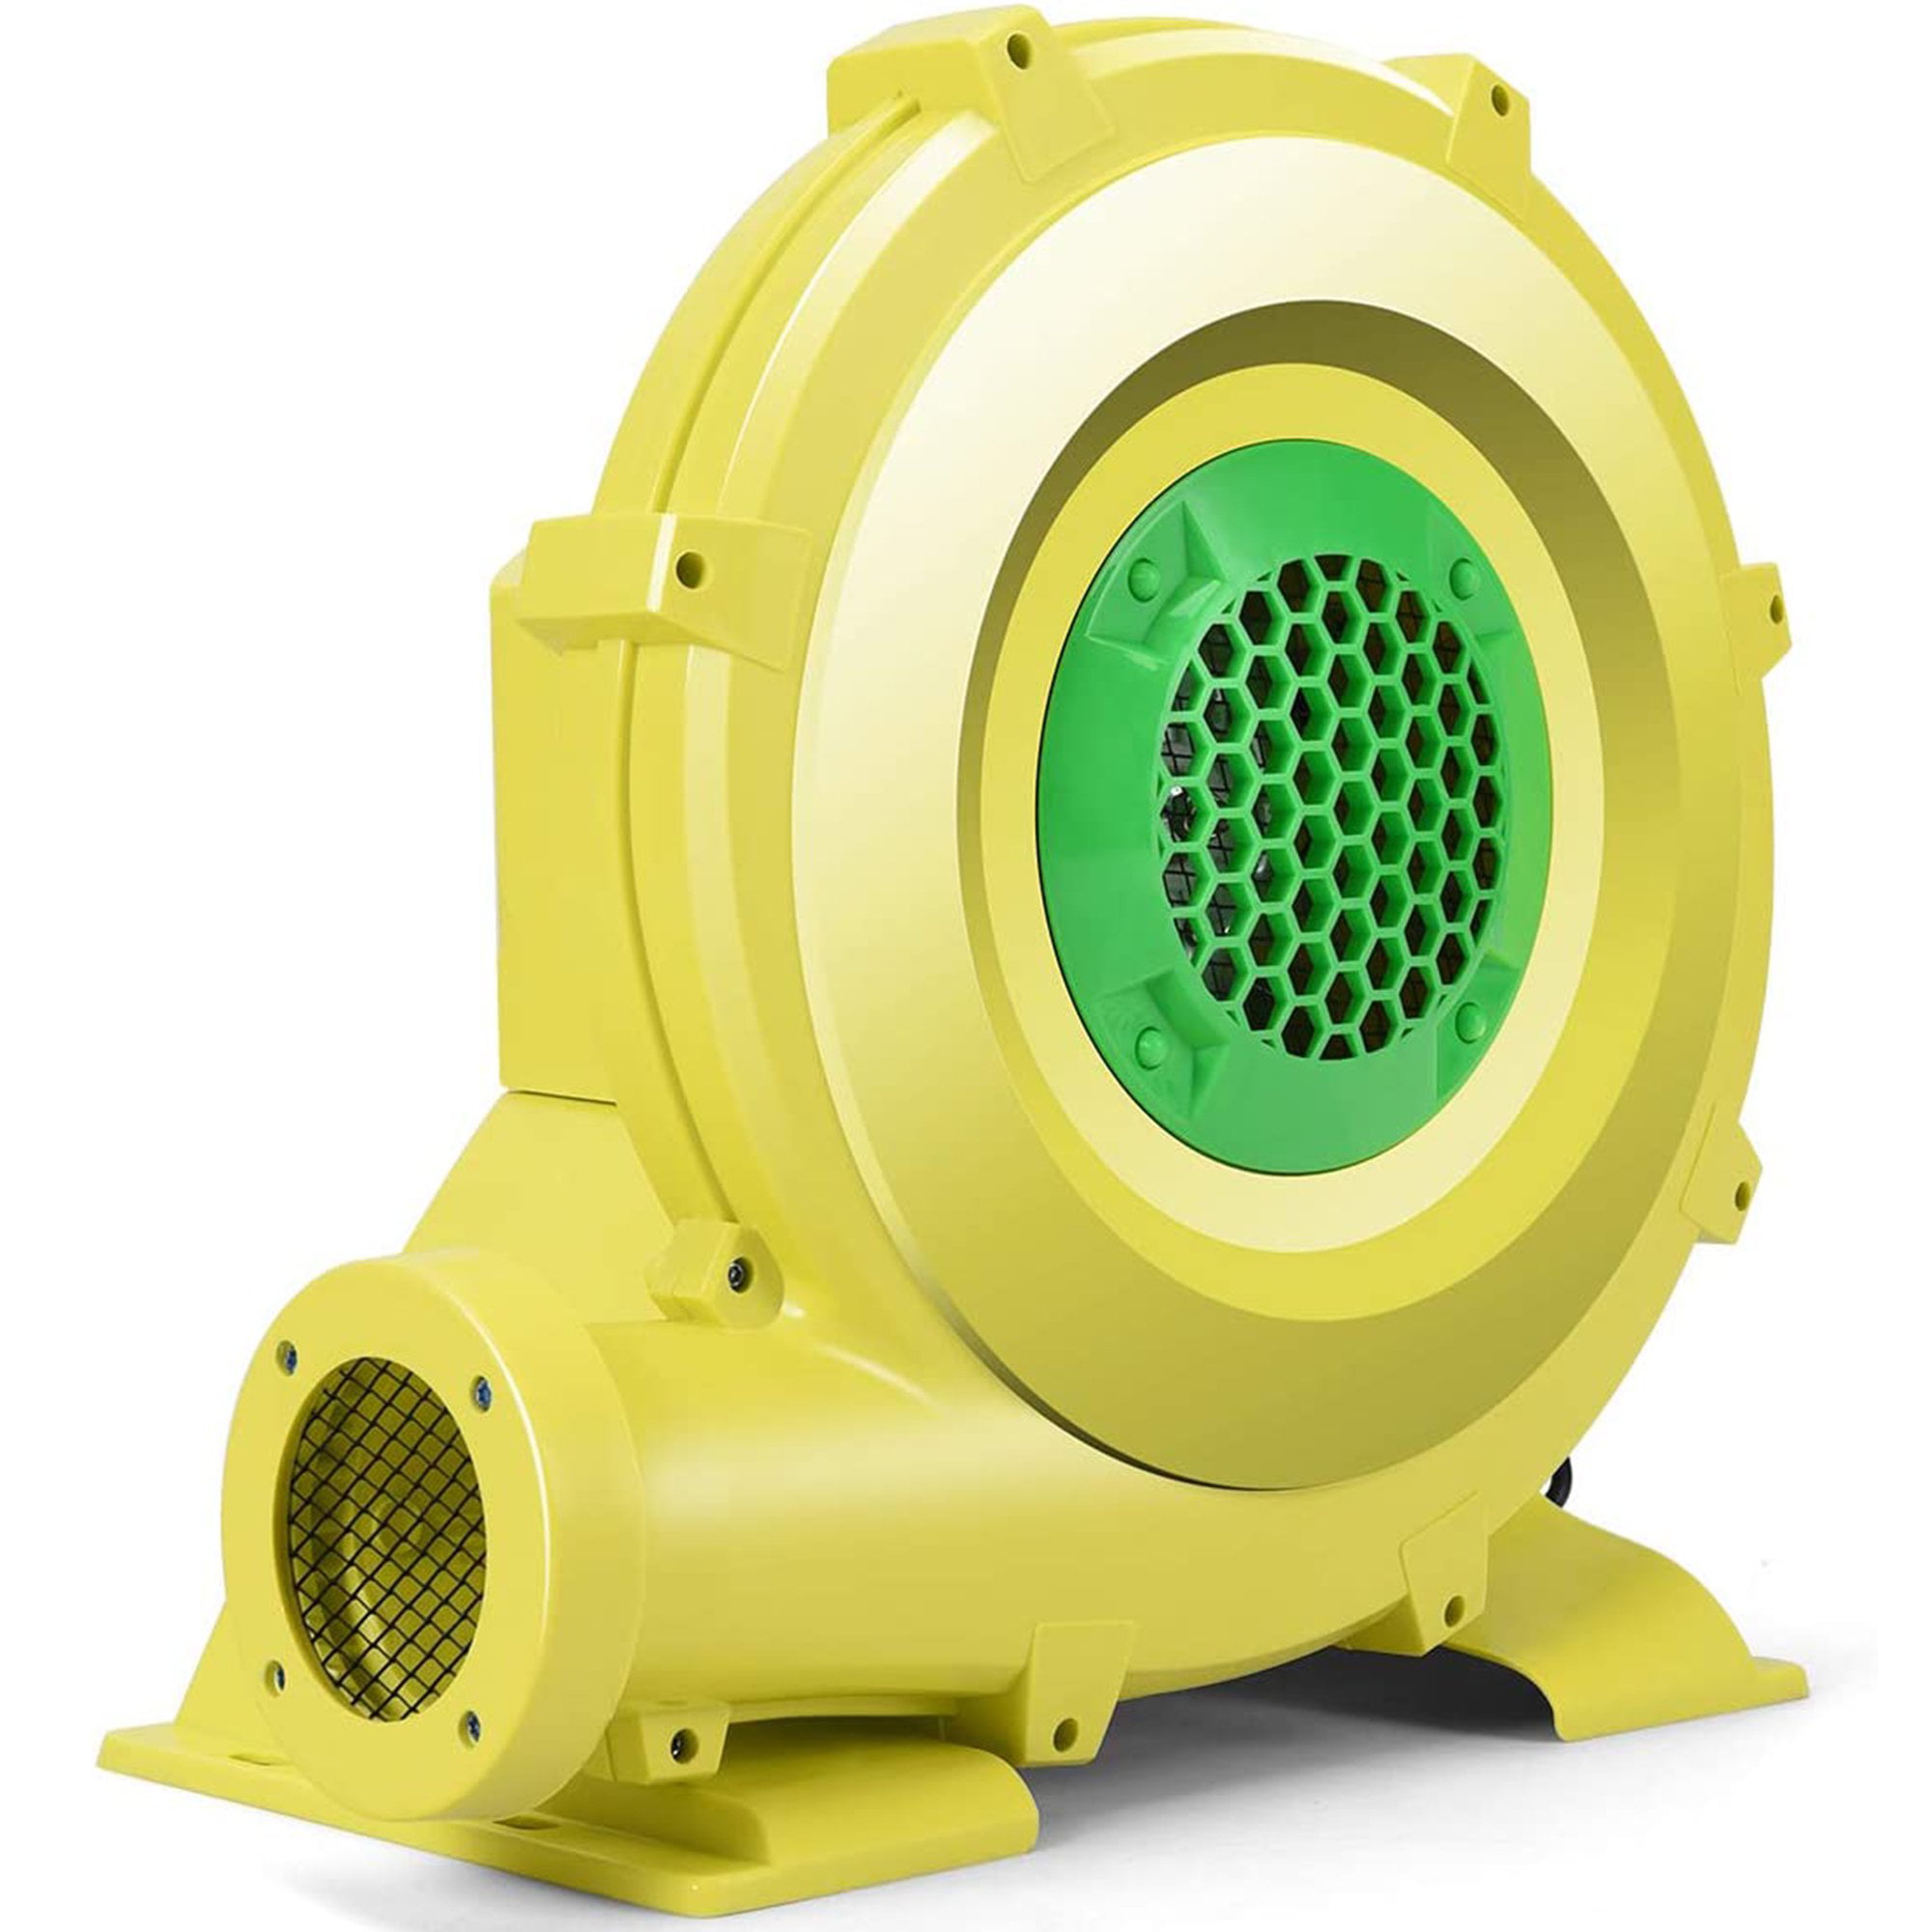 680 Watt Air Blower 1.0HP Pump Fan For Inflatable Bounce House Bouncy Castle 